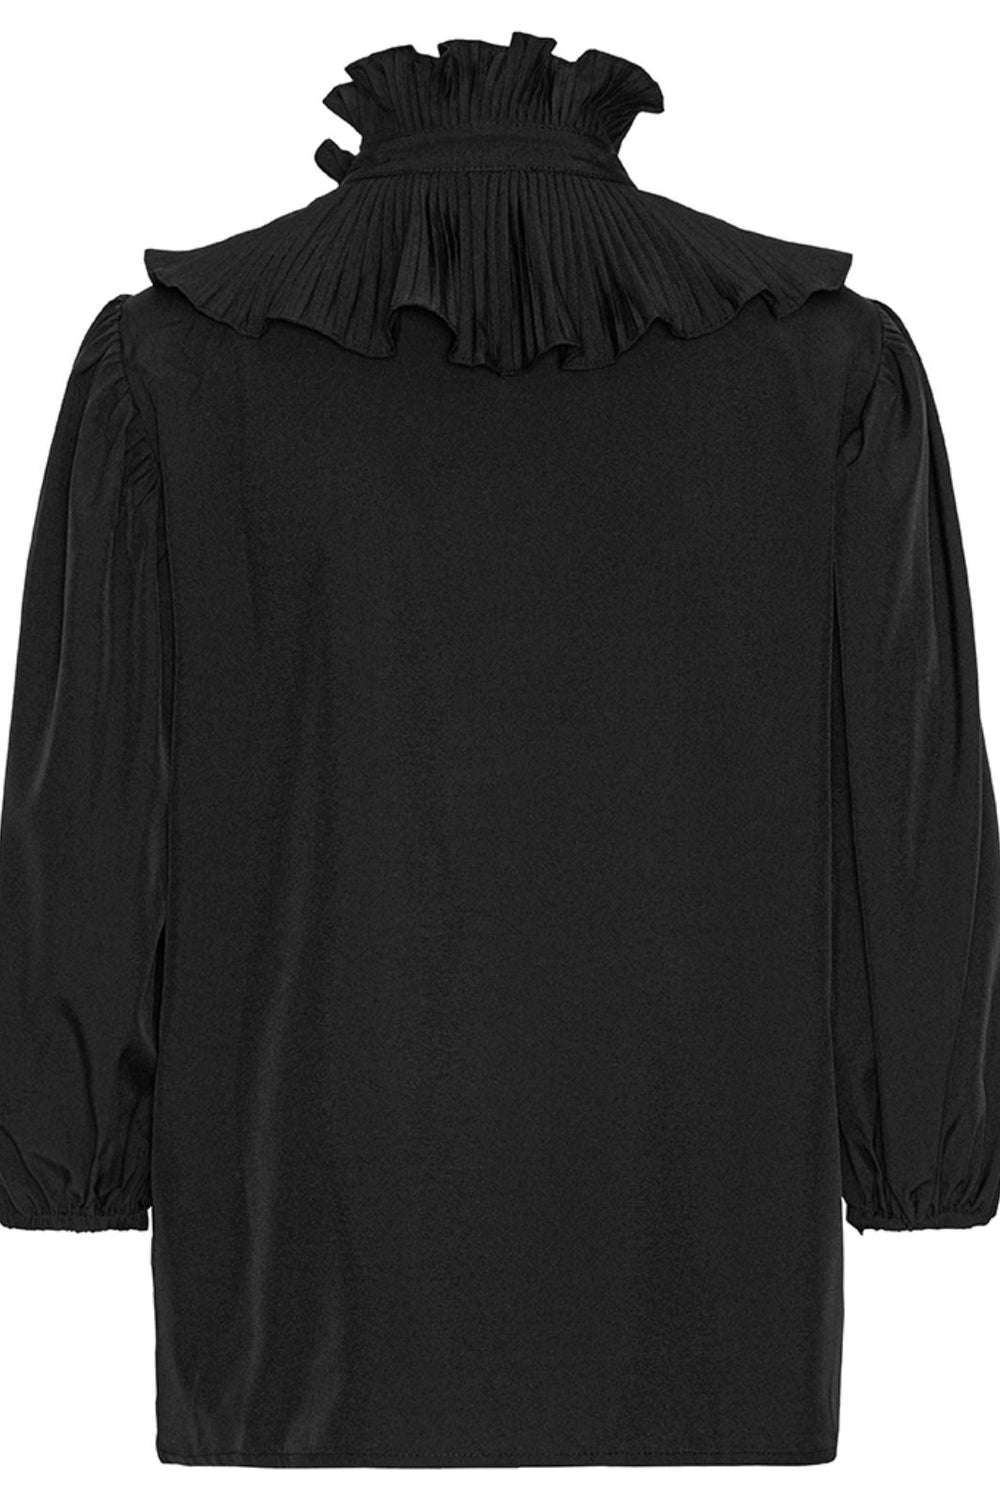 Continue - Pernille 3/4 Sleeve - 01 Black Skjorter 